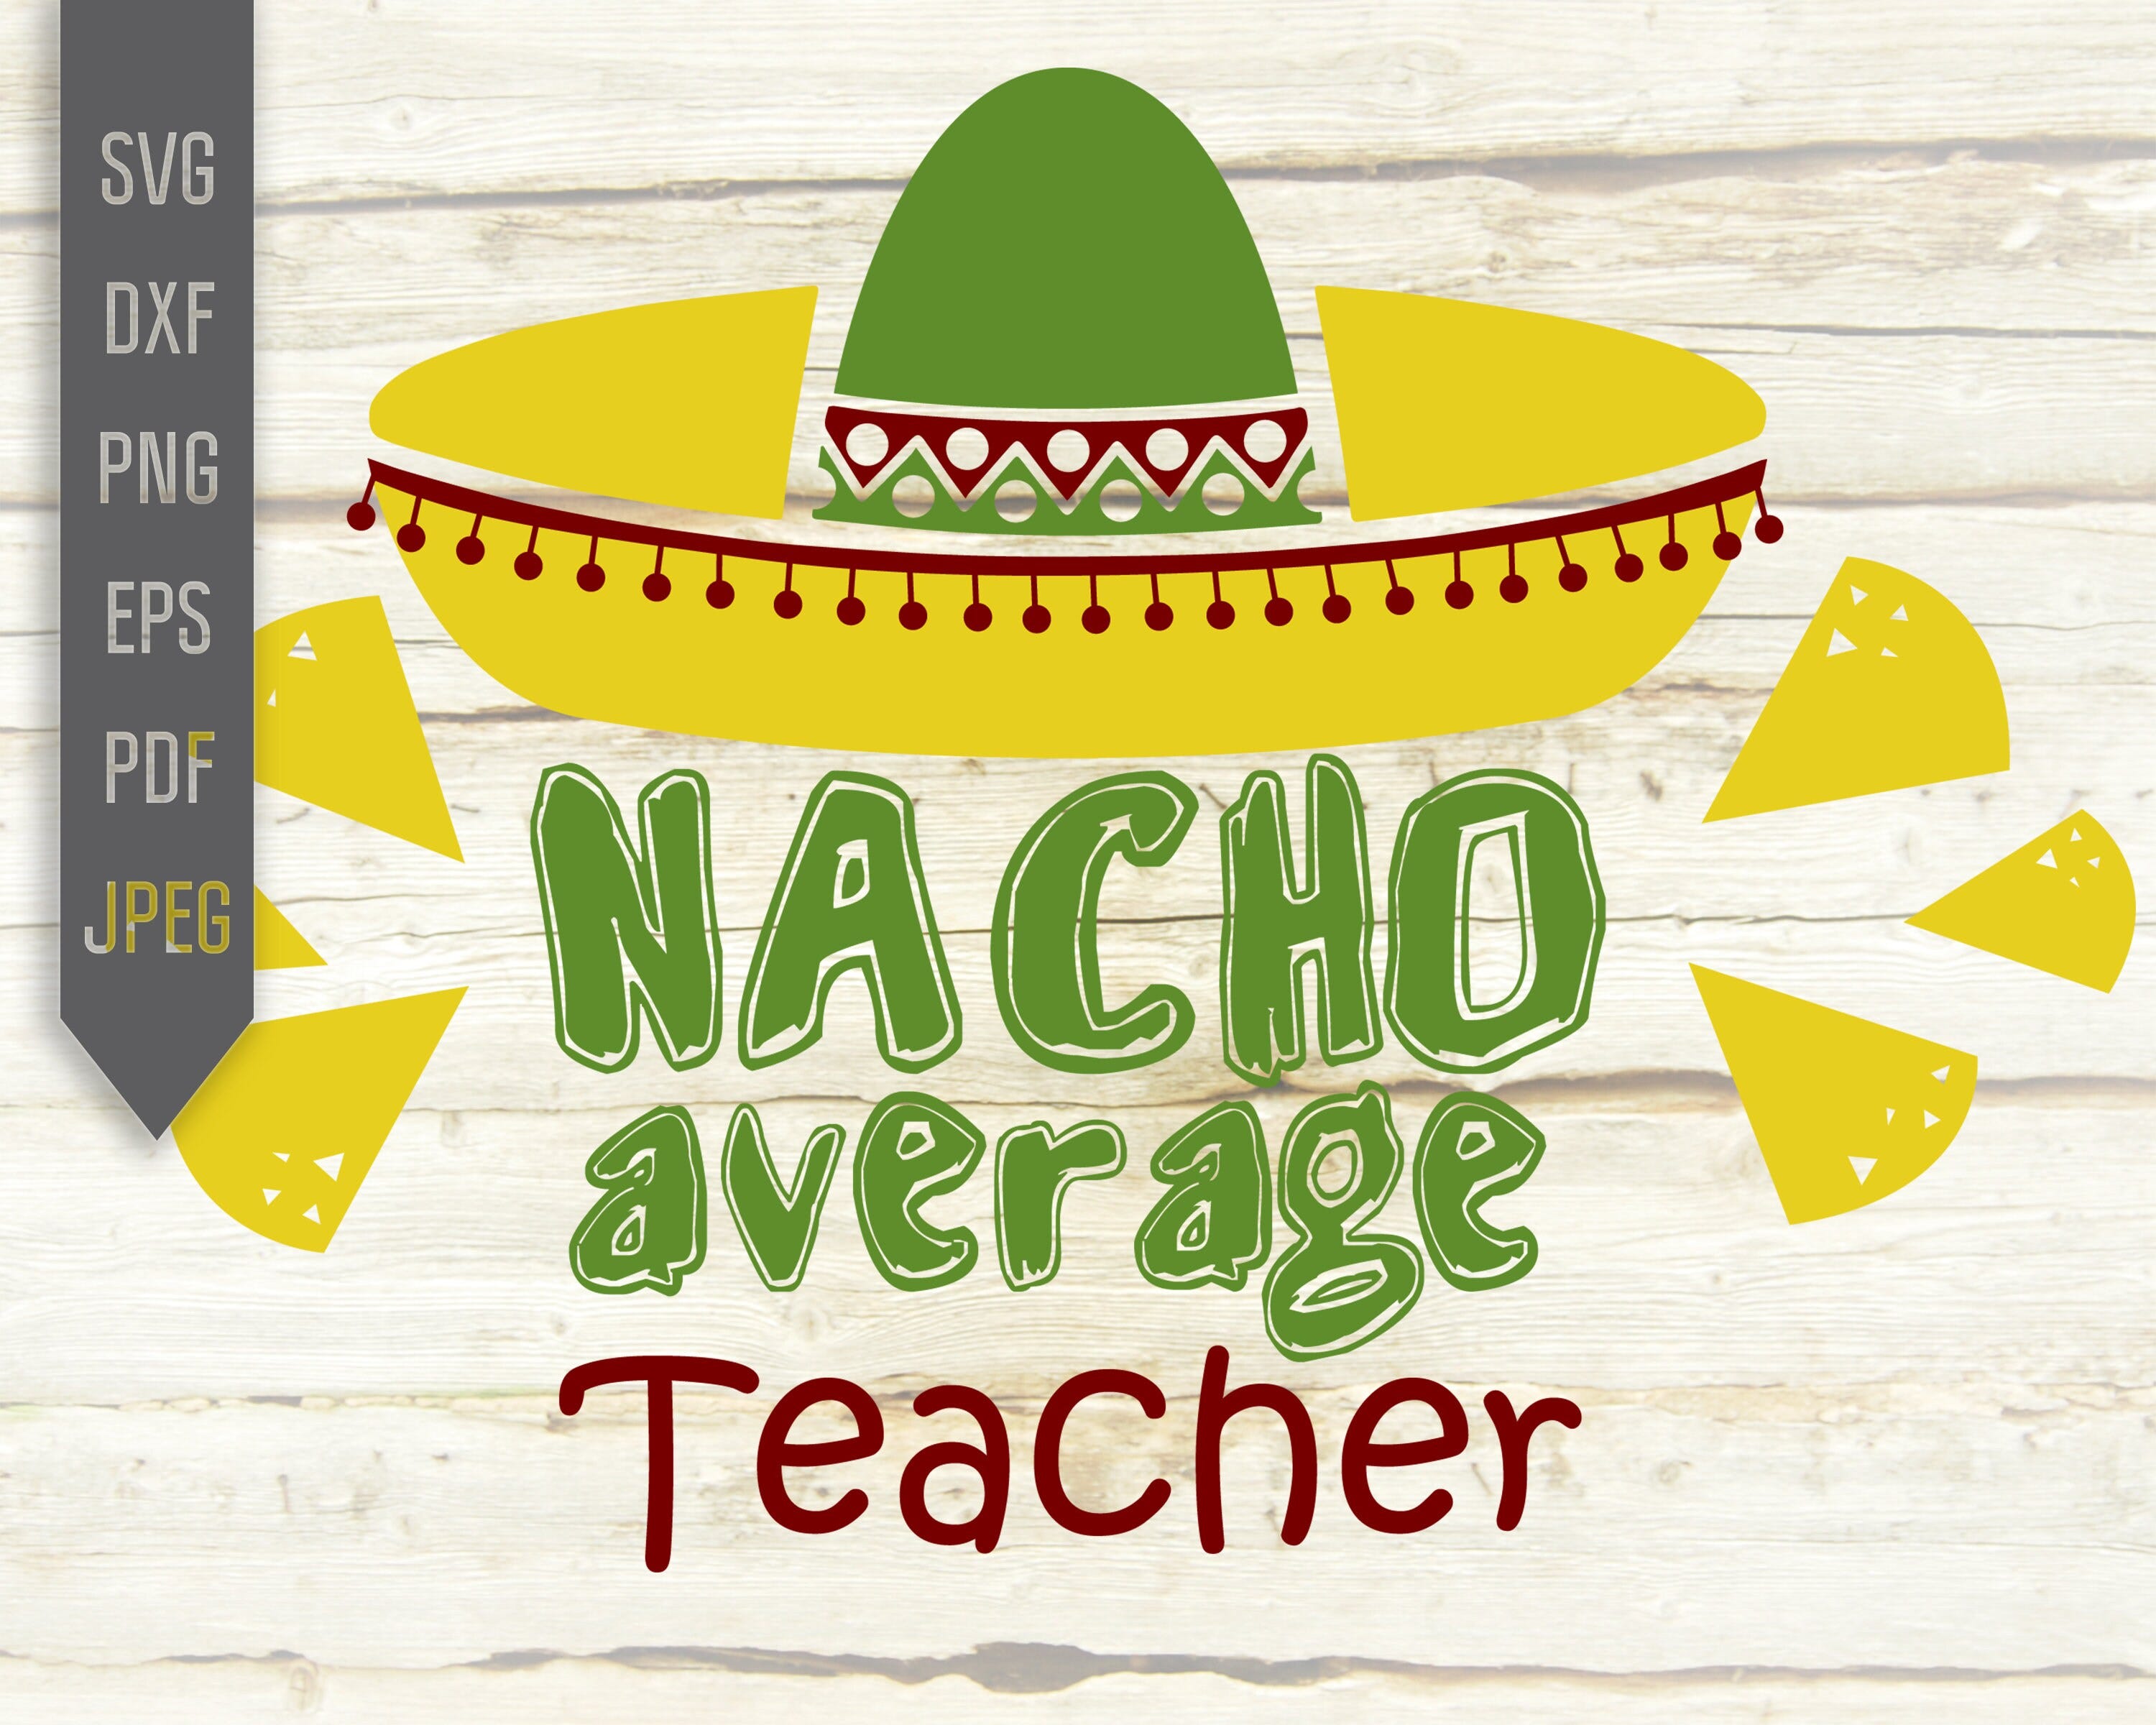 Nacho Average Teacher Svg. Cut Files For A Teacher T-Shirt Gift. Not Your Average Teacher. Teacher Thanksgiving Svg. Cricut, Silhouette